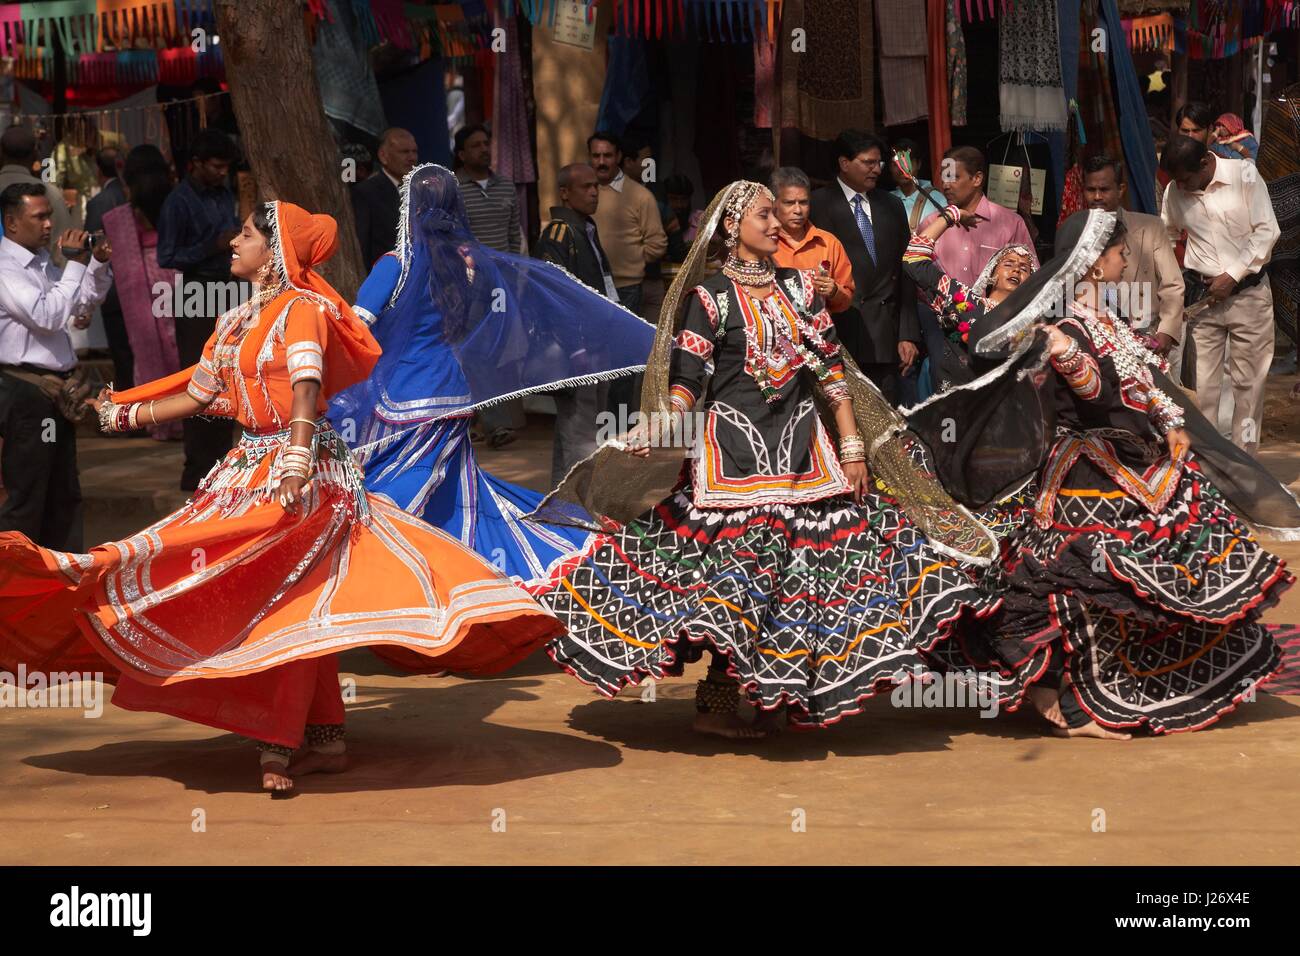 Group of Kalbelia dancers from Rajasthan performing at the Sarujkund Fair near Delhi, India. Stock Photo